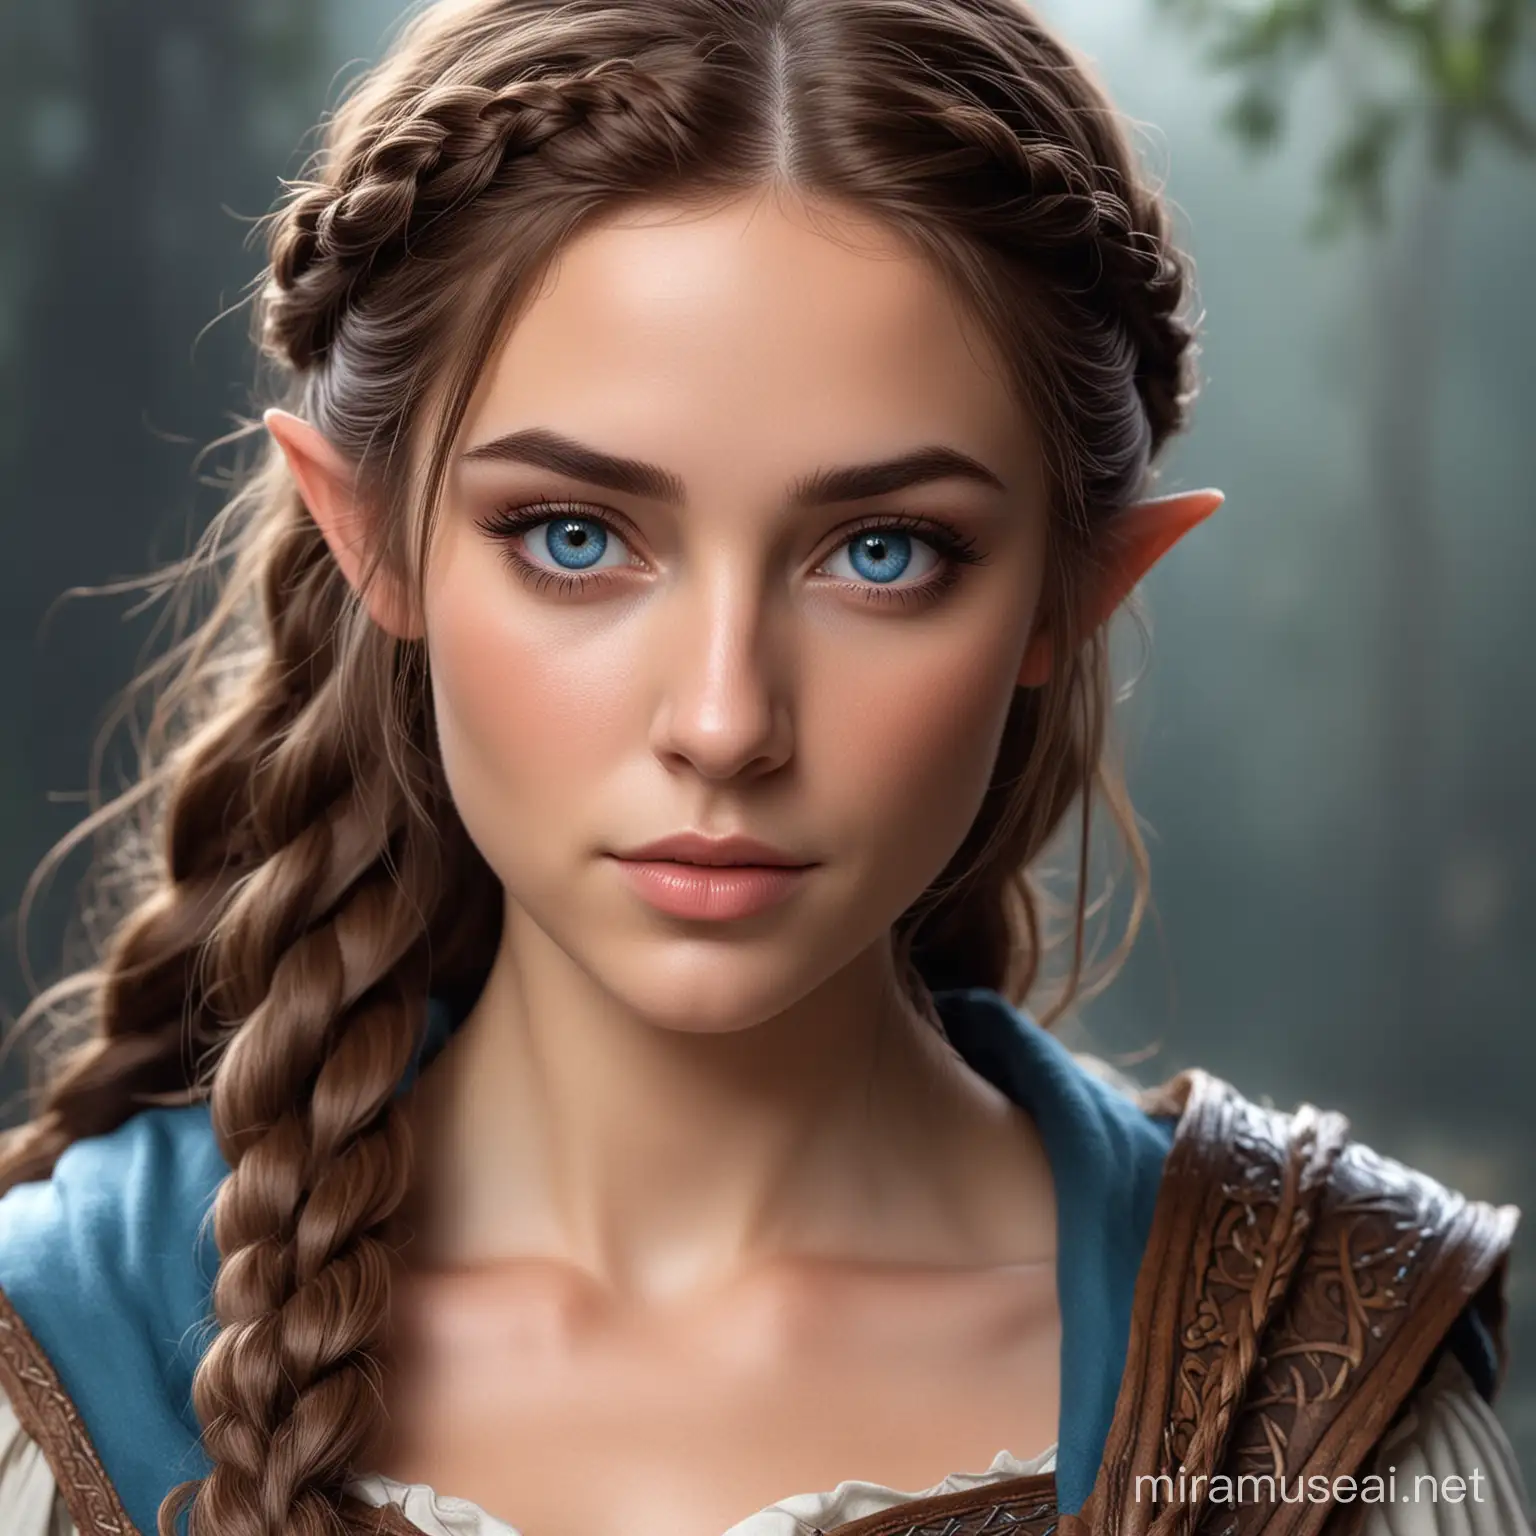 Enchanting HalfElf Bard with Braided Brown Hair and Blue Eyes